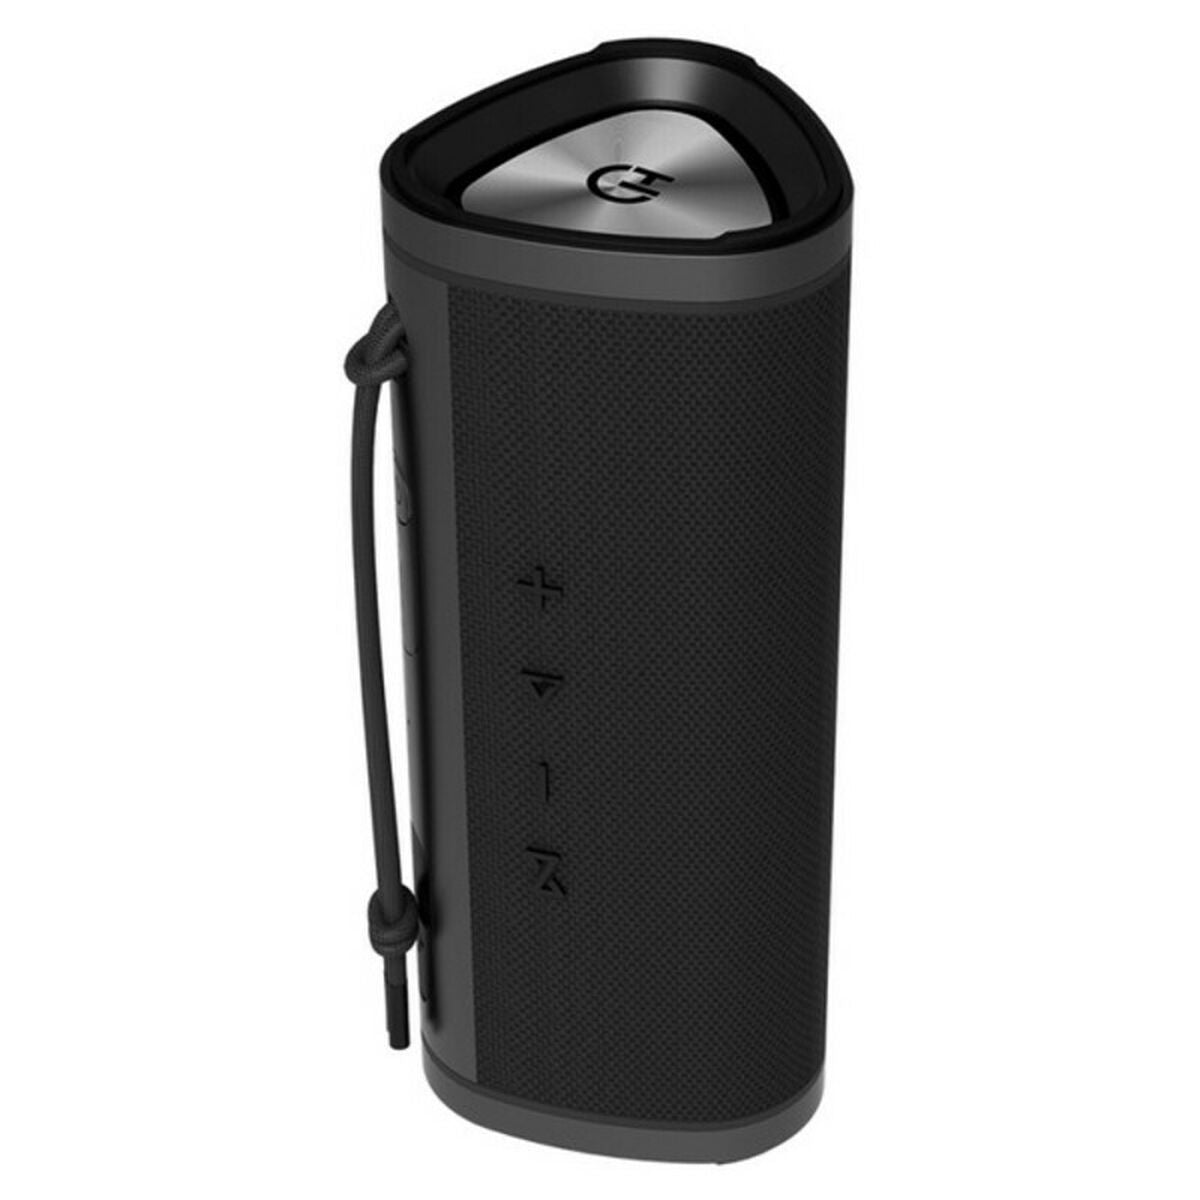 Drahtlose Bluetooth Lautsprecher Hiditec SPBL10005 3600 mAh 10W Schwarz